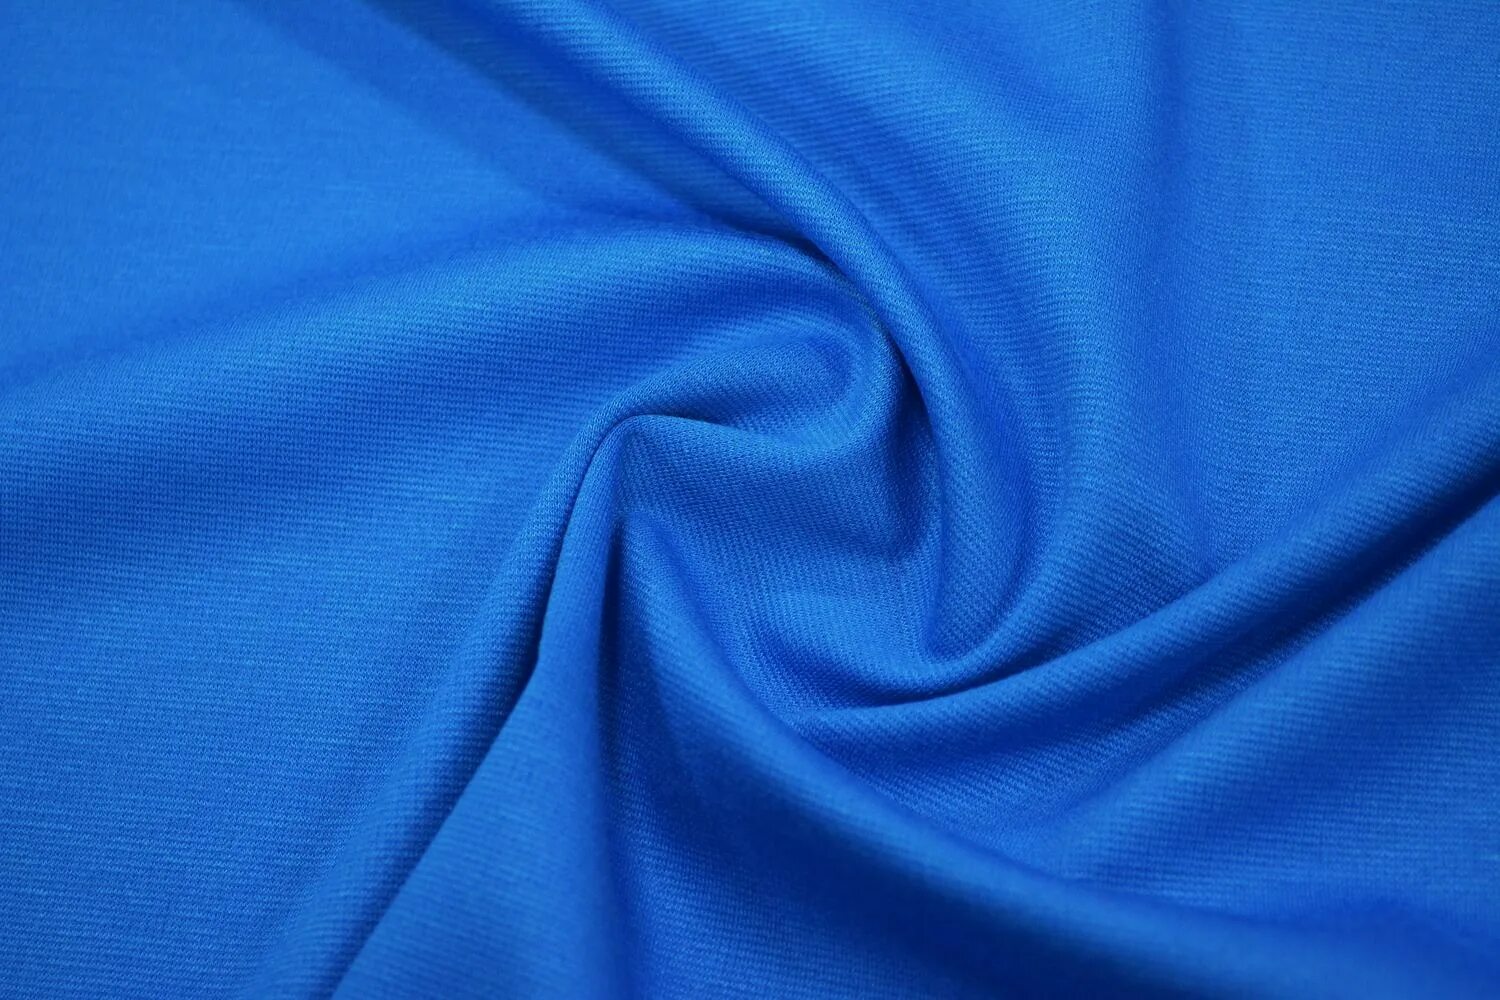 Джерси ткань. Джерси ткань голубая. Ткань трикотаж вискоза плотность 100 гр./м. Ткань джерси, плотный трикотаж опт.